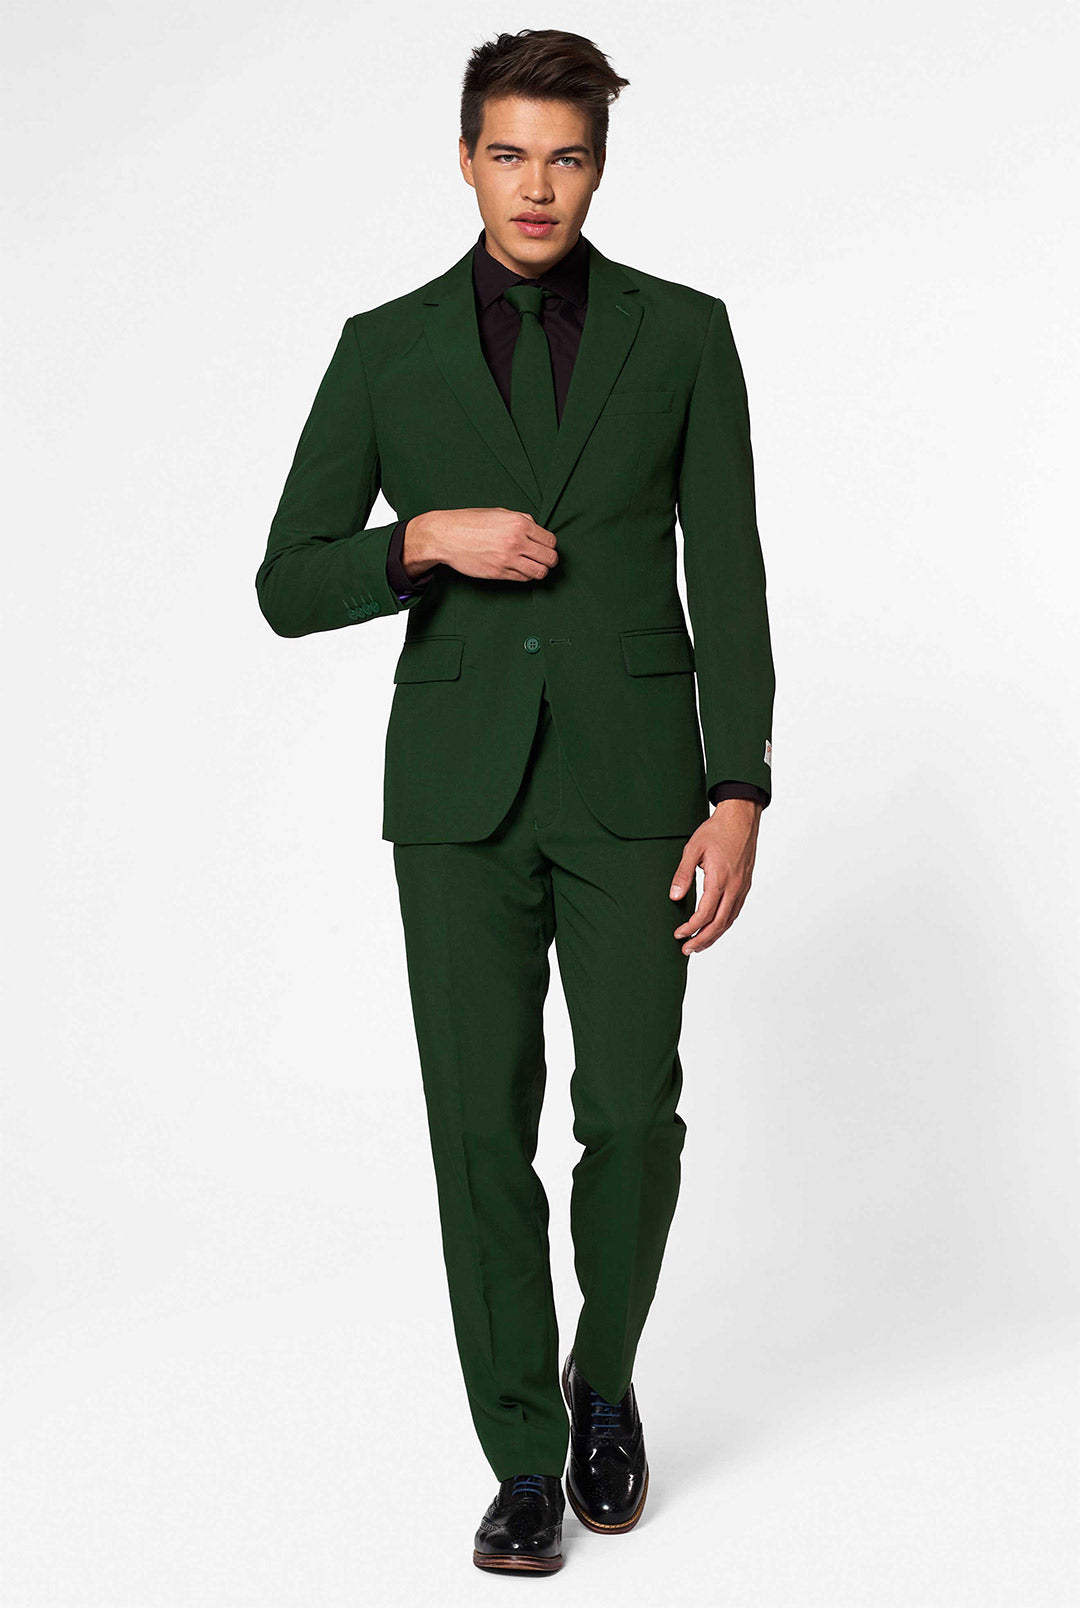 62 Green men suit ideas | green suit, wedding suits men, green suit men